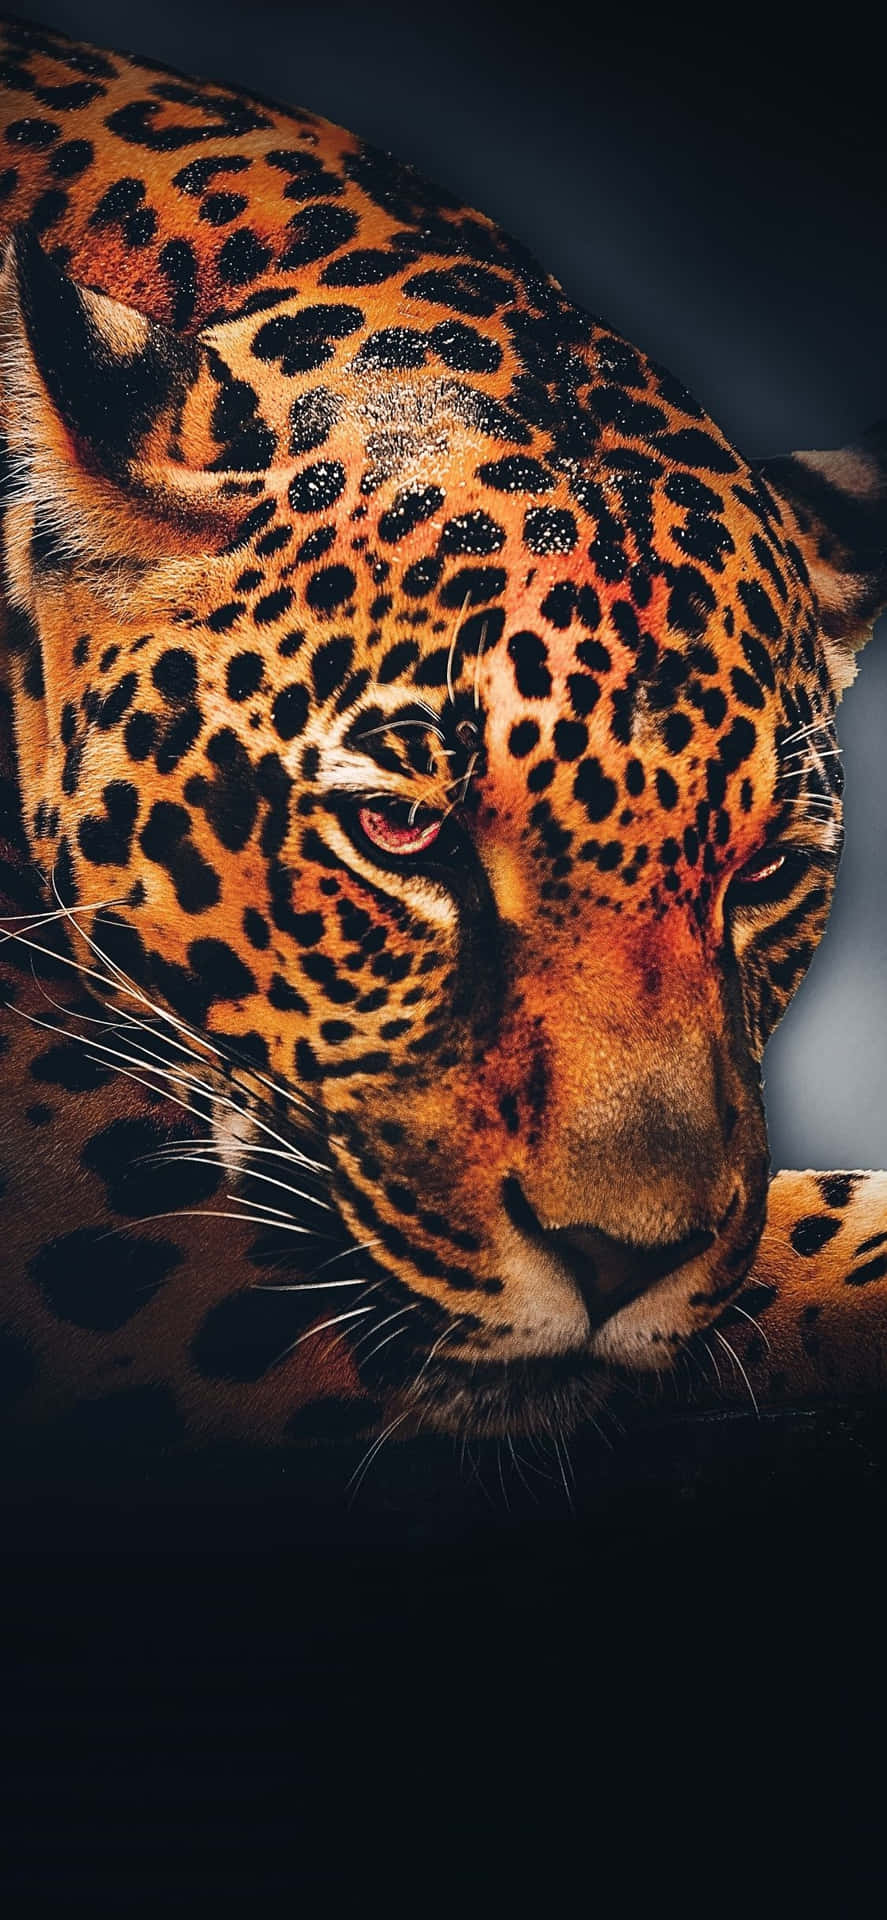 A leopard above the African Savannah